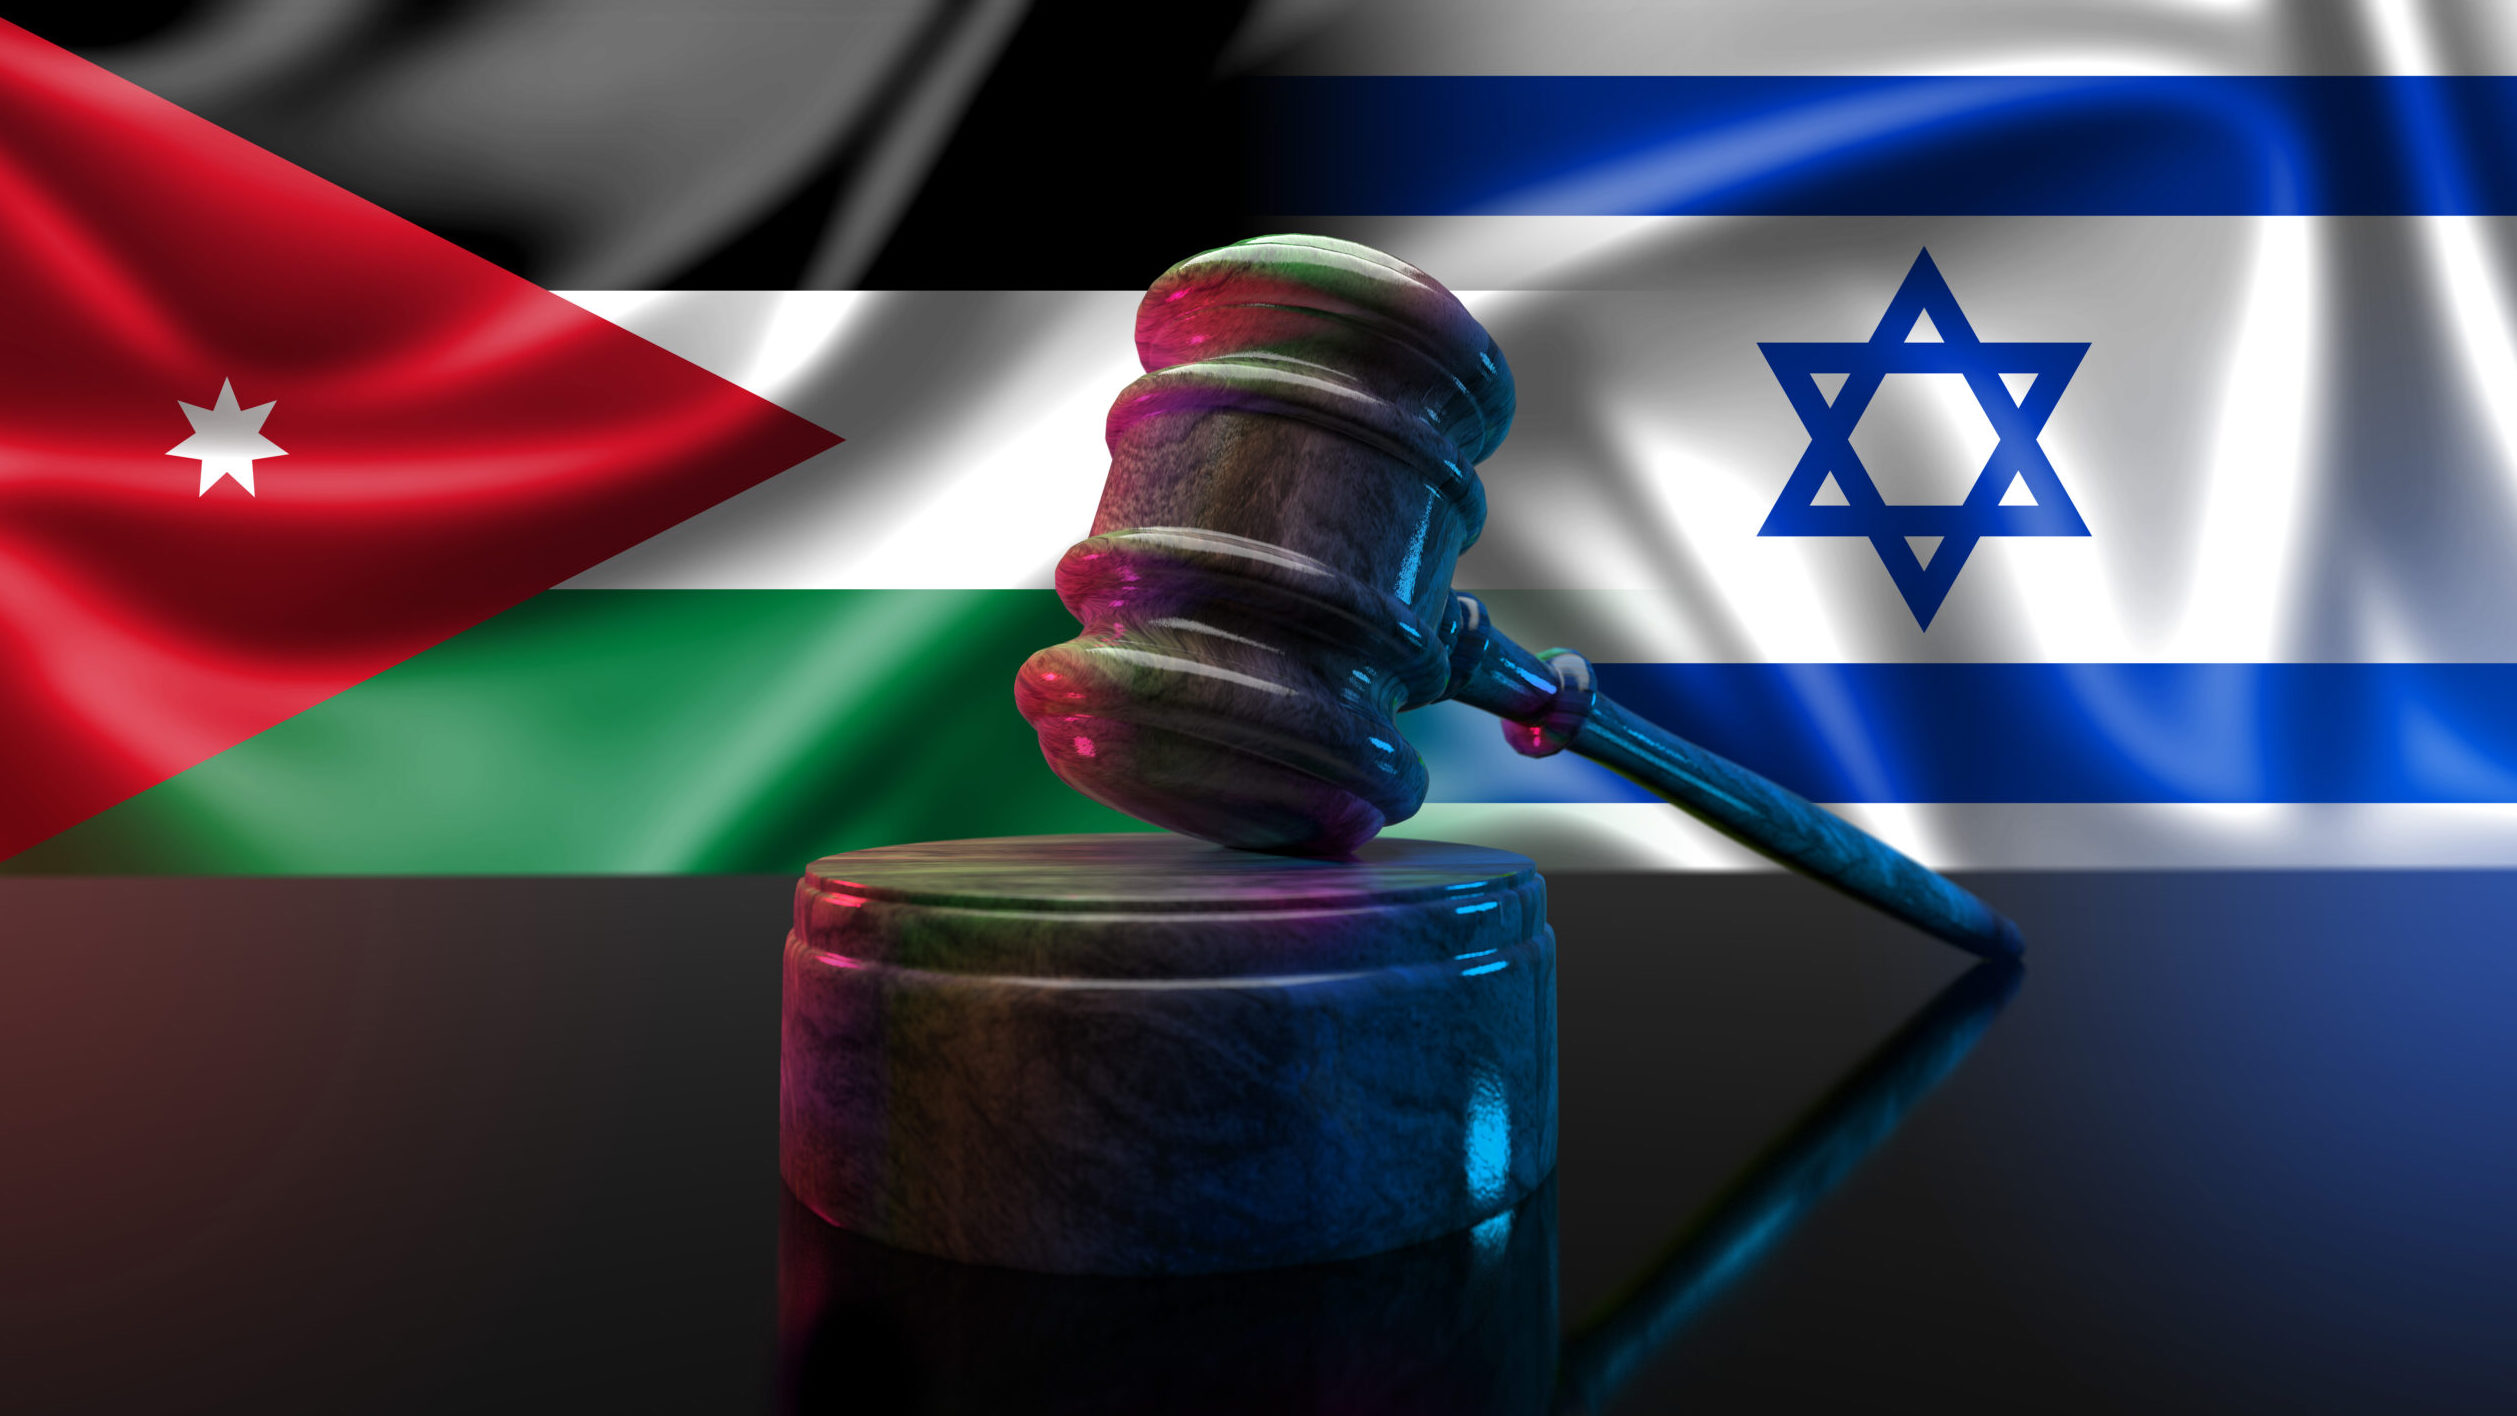 Jordan Ramps up Diplomatic Pressure on Israel Over Palestinian Issue